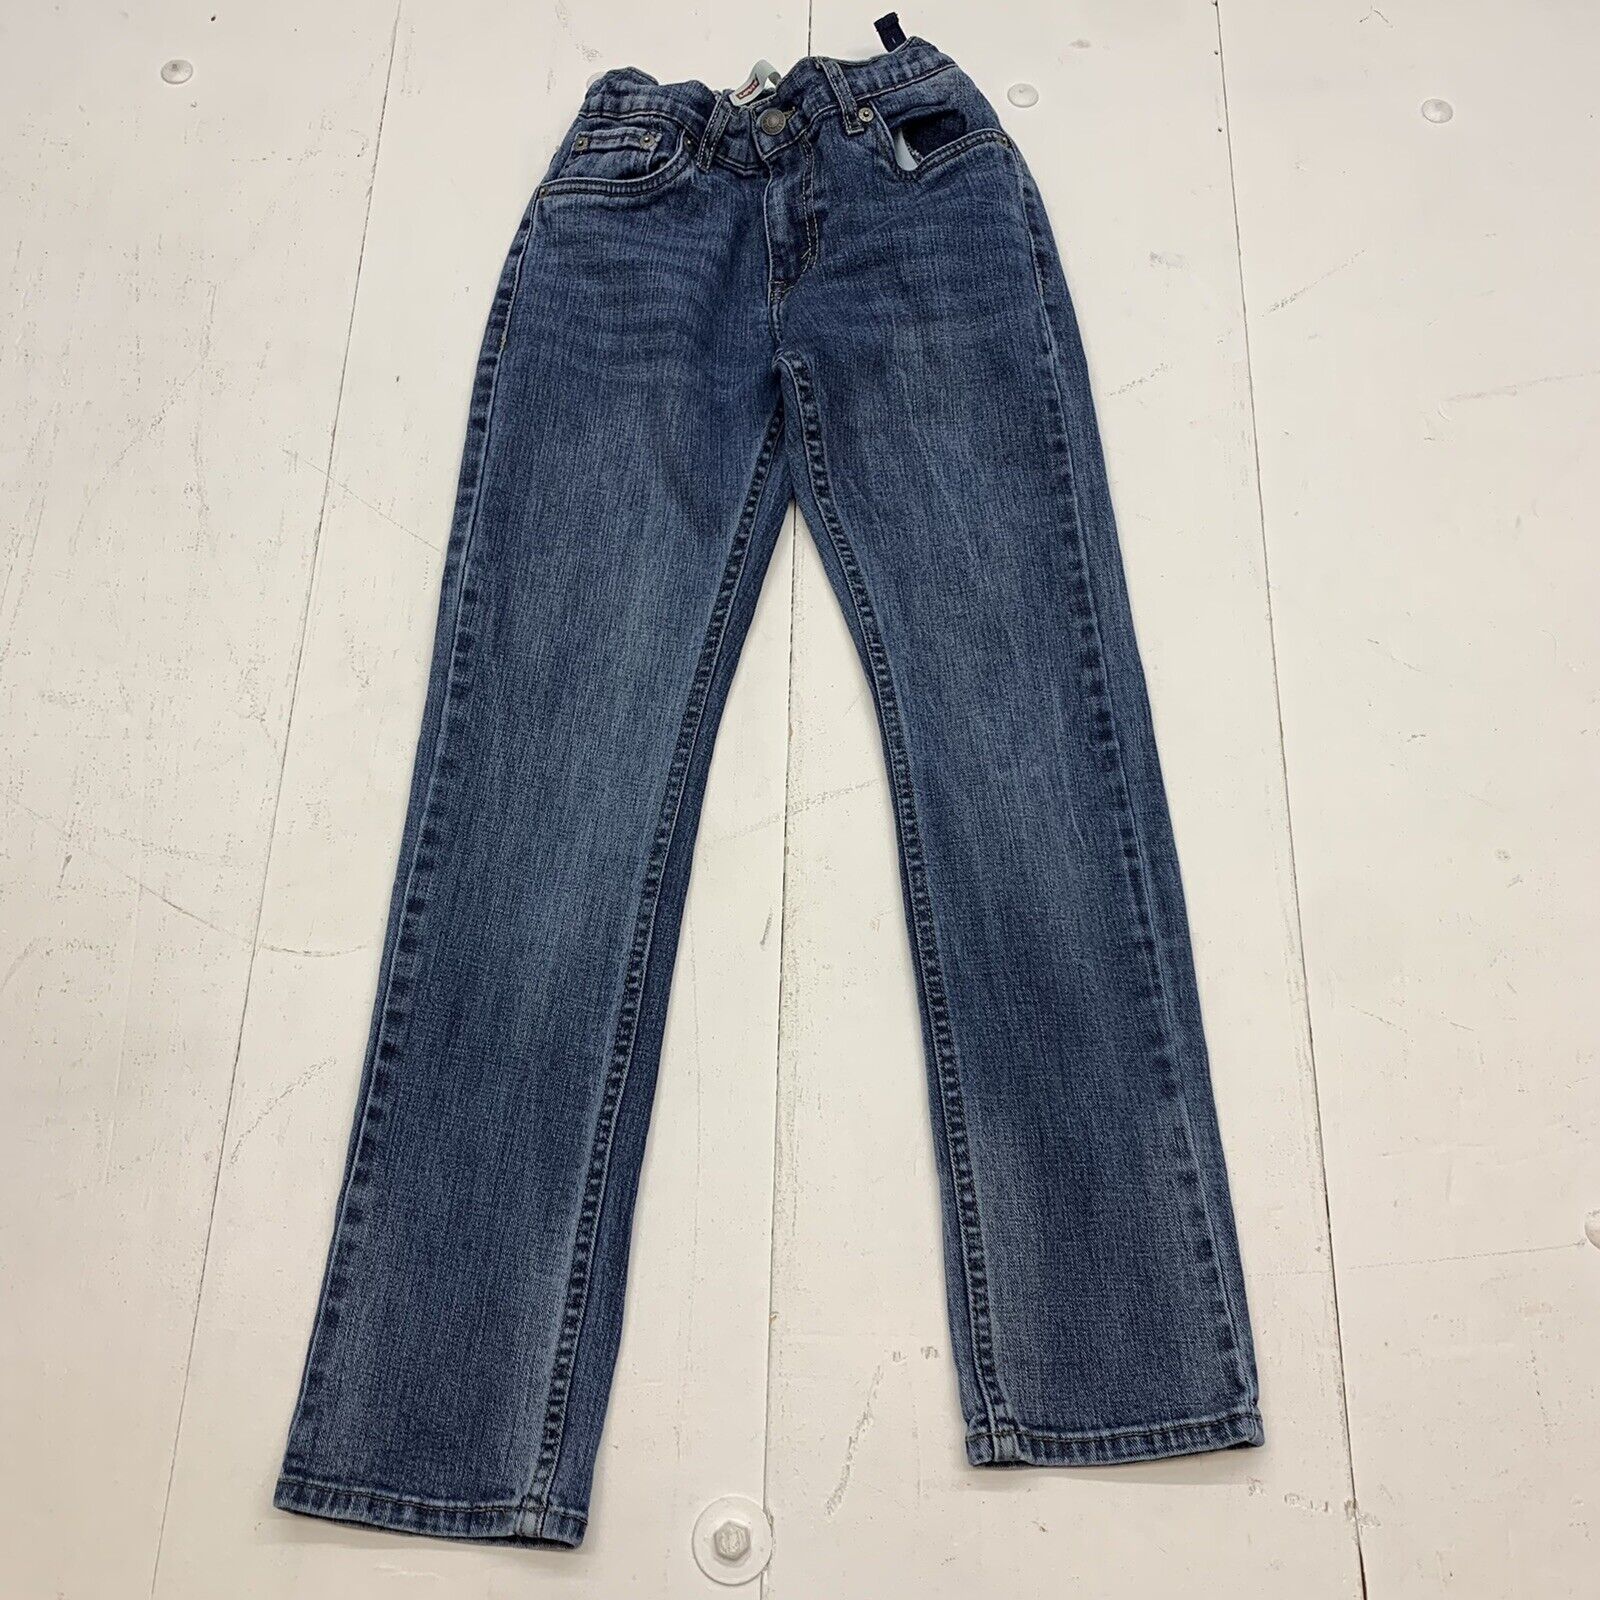 Levis 511 Boys Jeans Size size 14 - beyond exchange